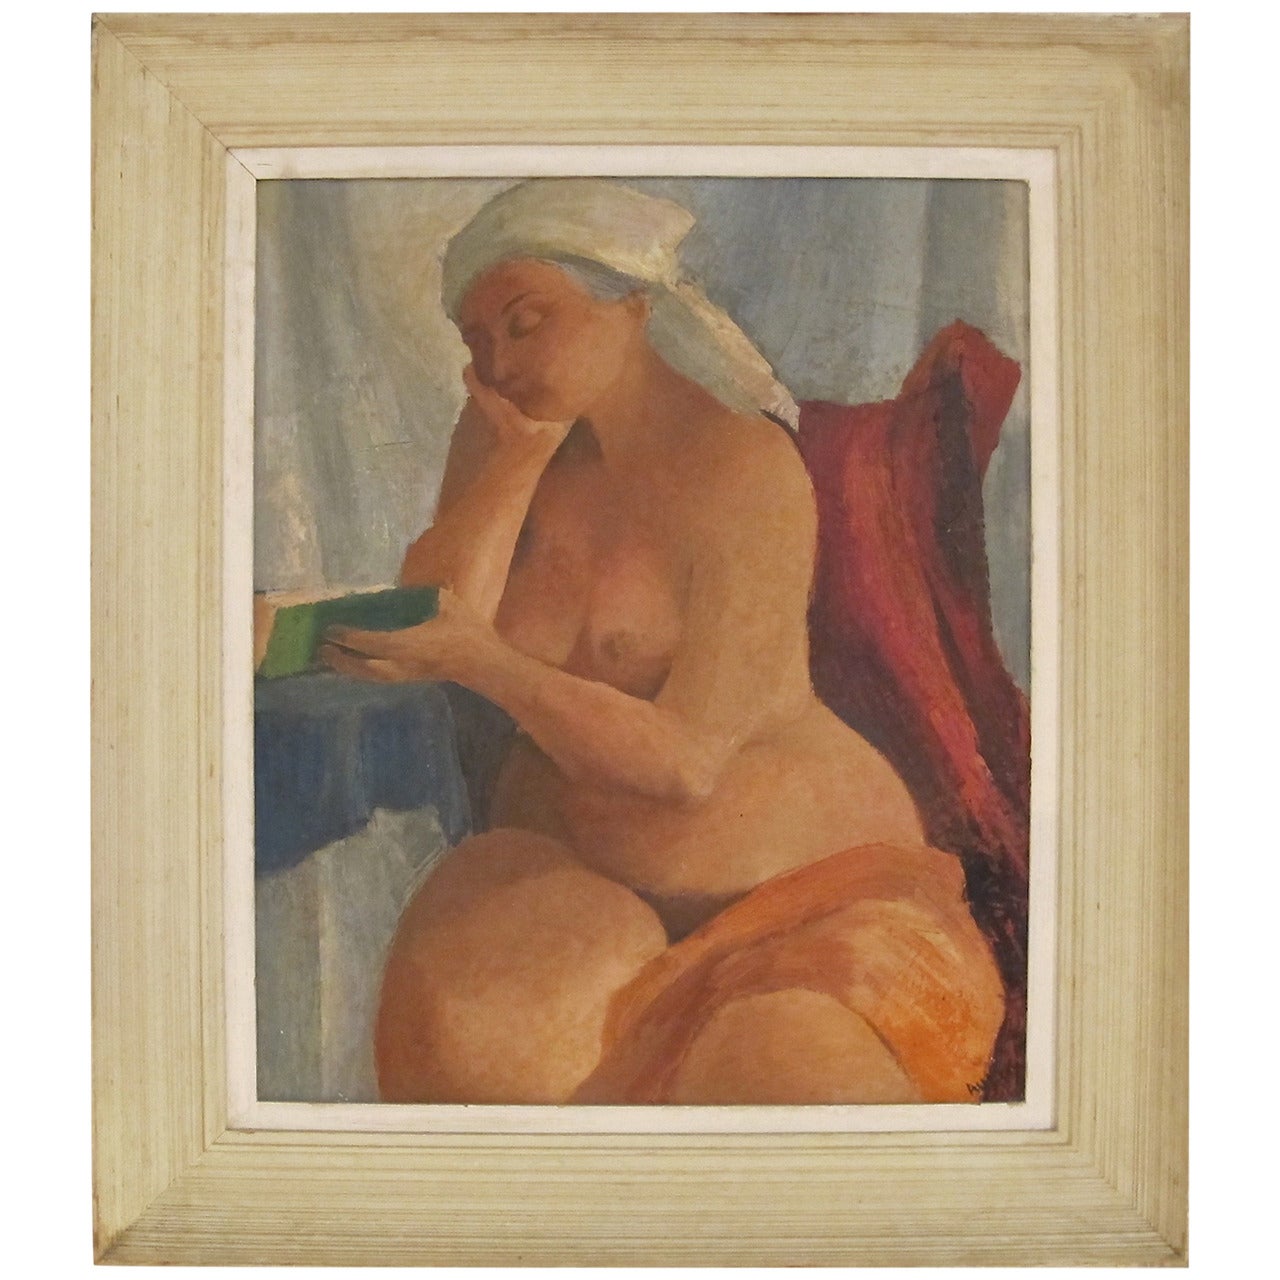 Pintura expresionista de desnudos de mediados del siglo XX